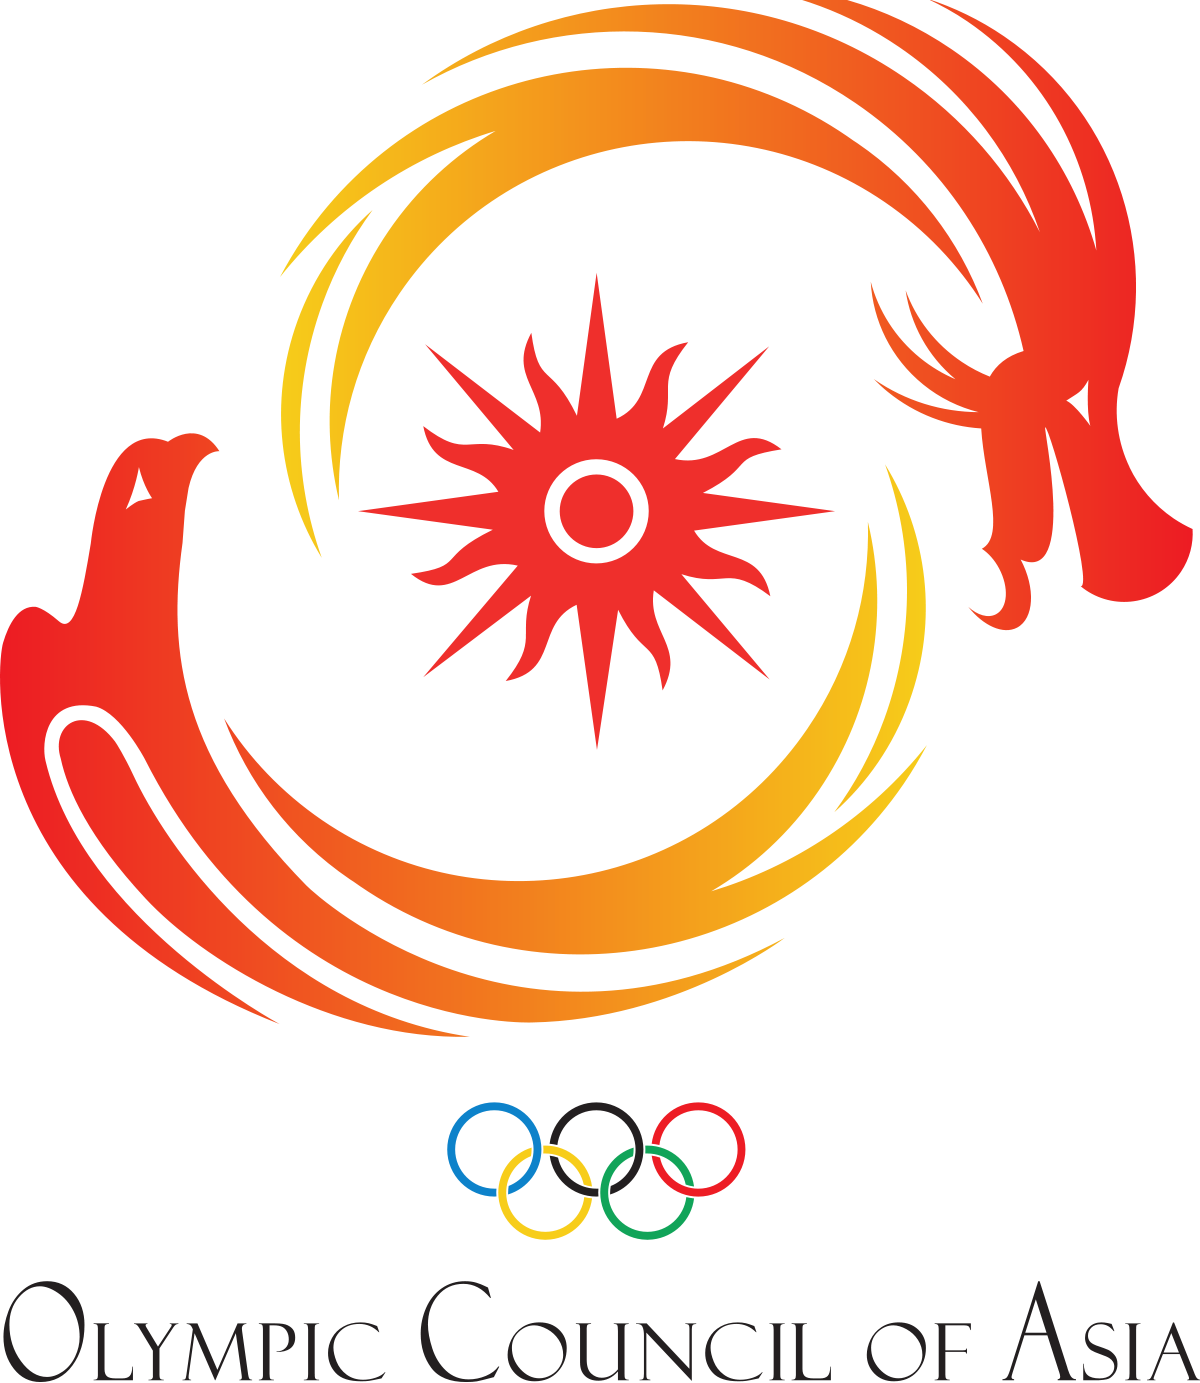 Indonesia Olympic Commitee - OCA confirms AIMAG postponement to 2023